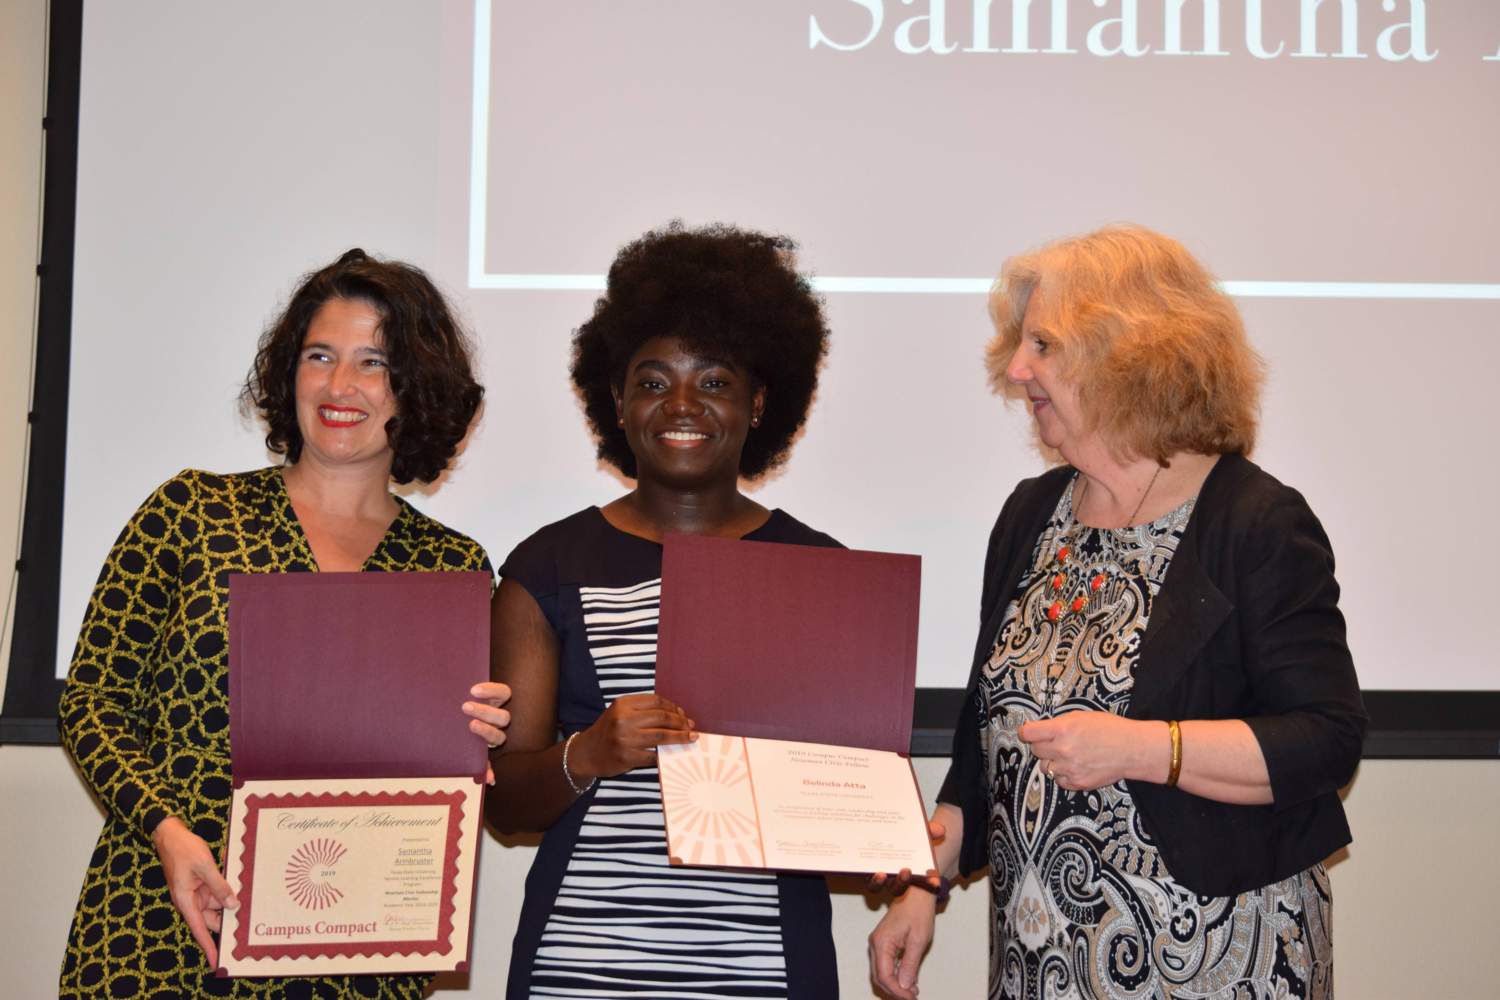 Fellowship winner receiving recognition honor